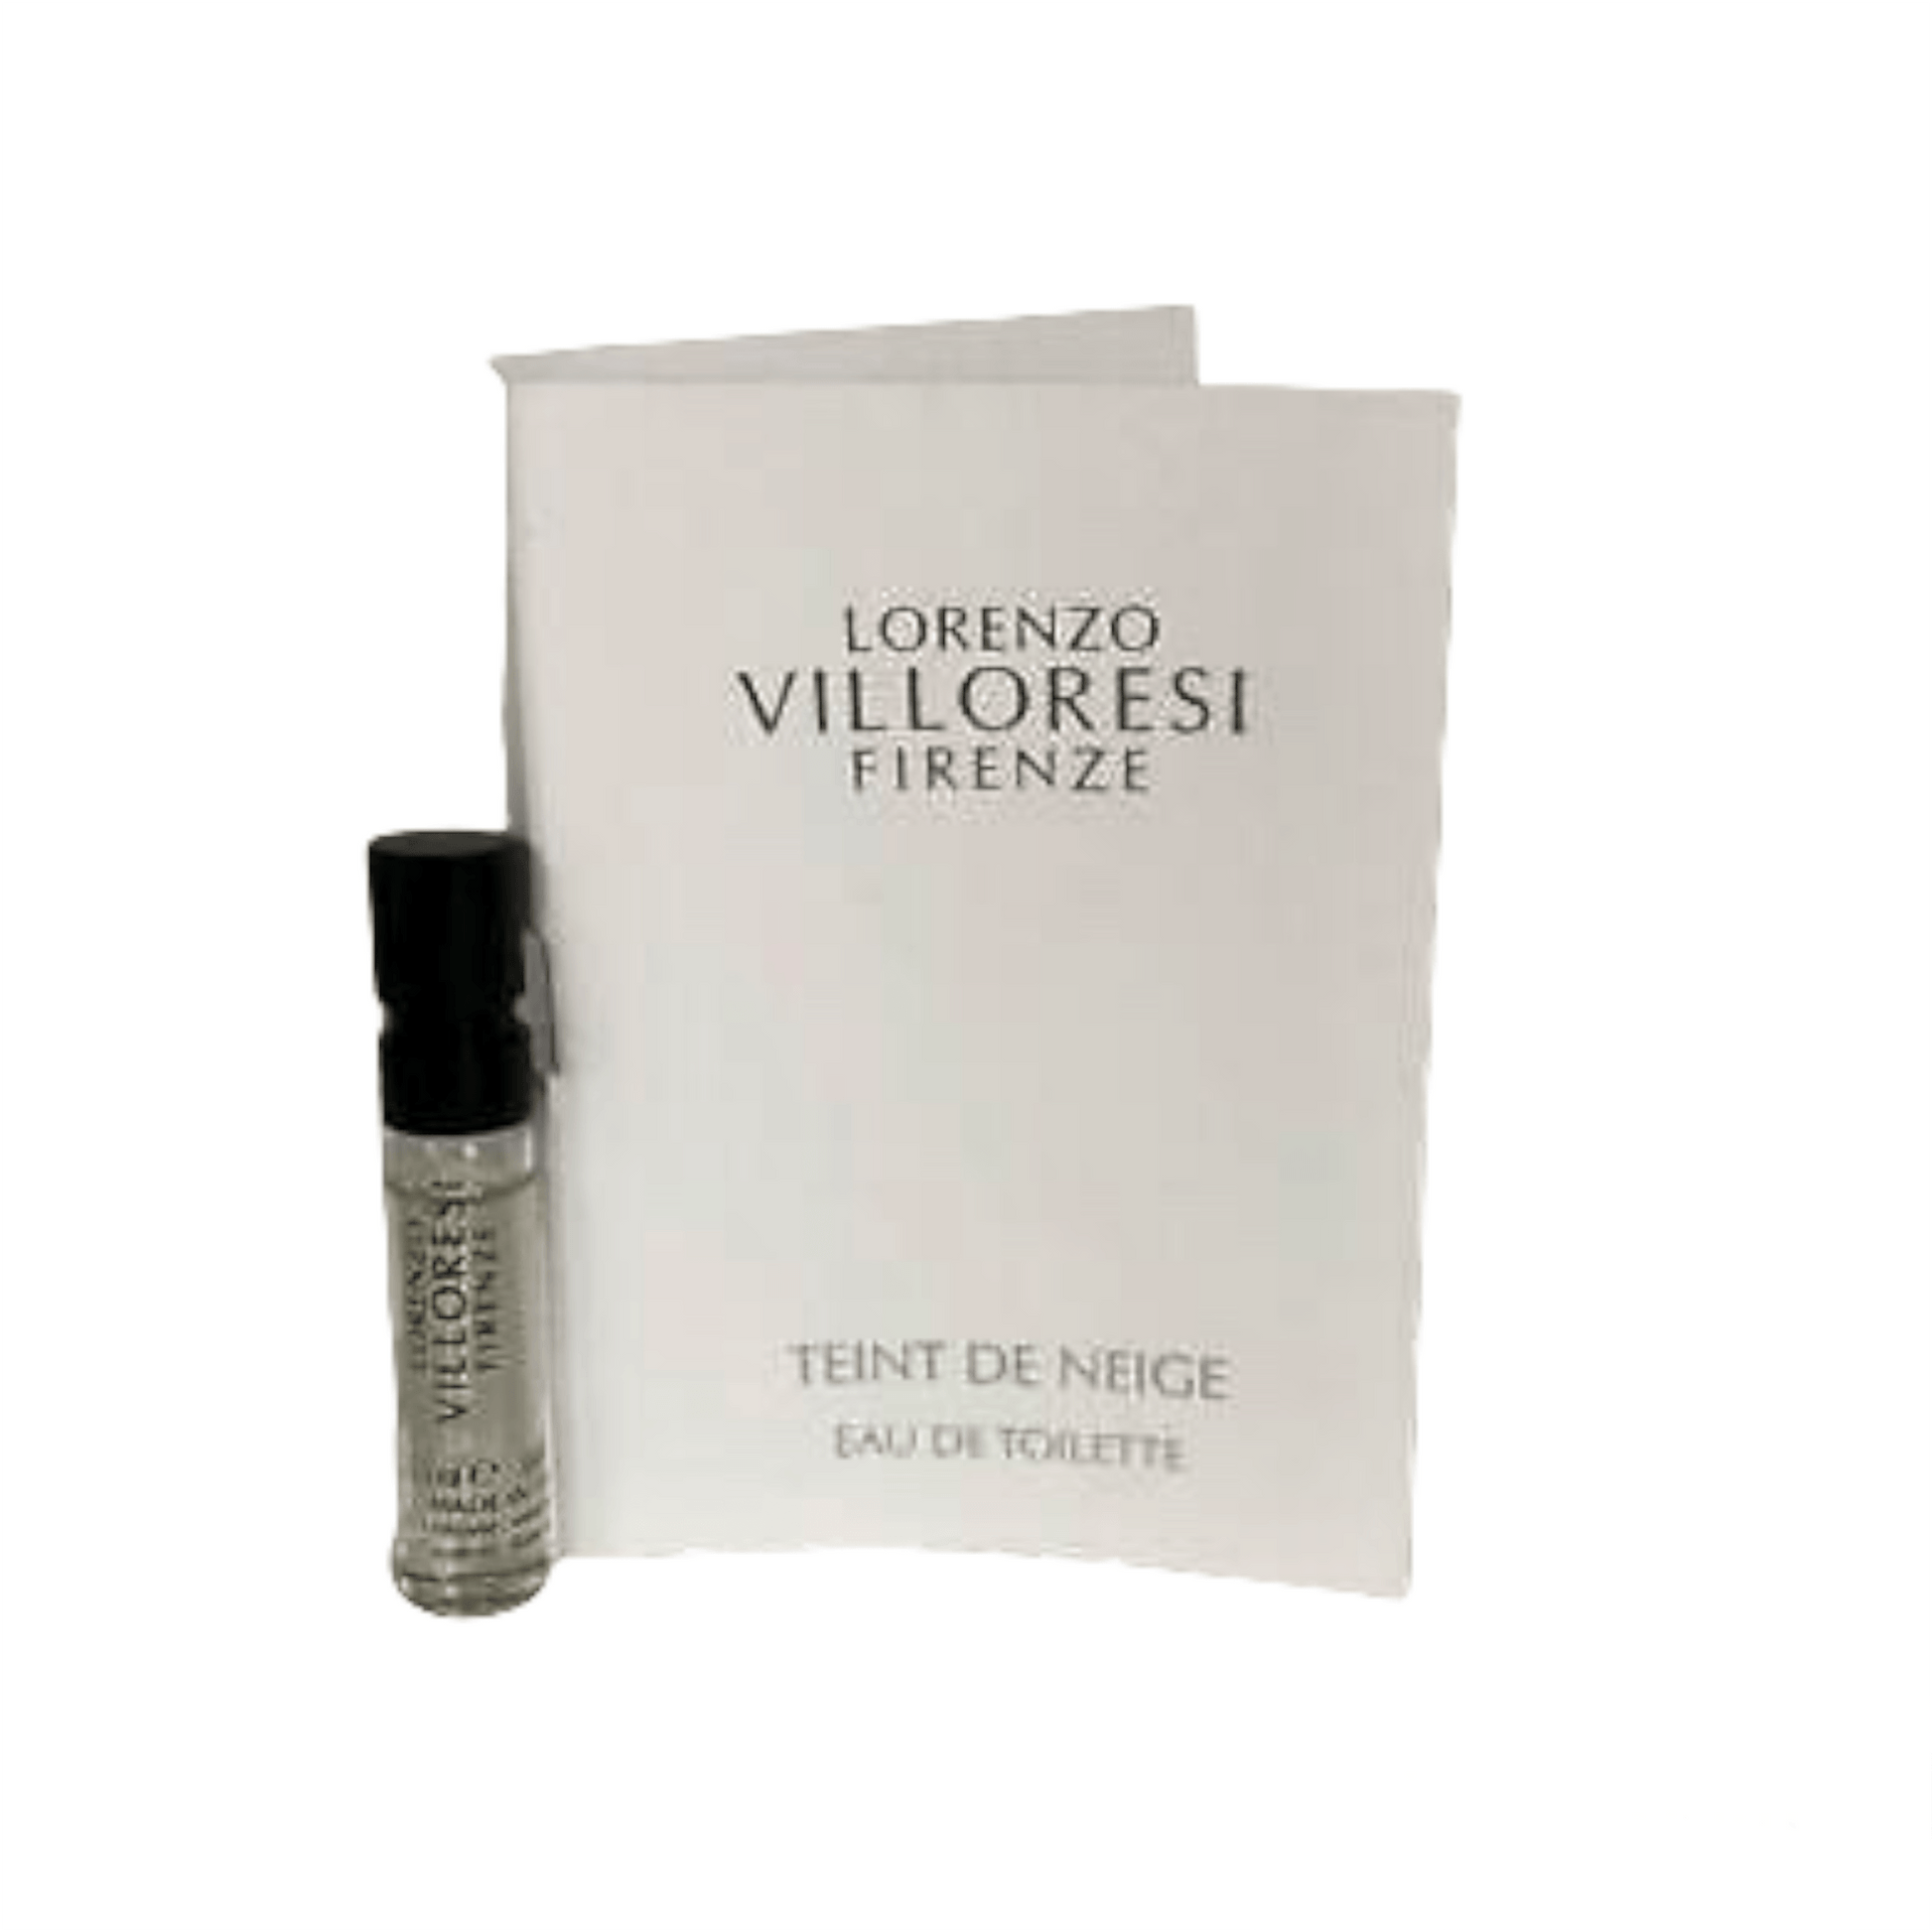 Lorenzo Villoresi Firenze Teint de Neige oficiālais smaržas paraugs 2ml 0.06 fl. oz